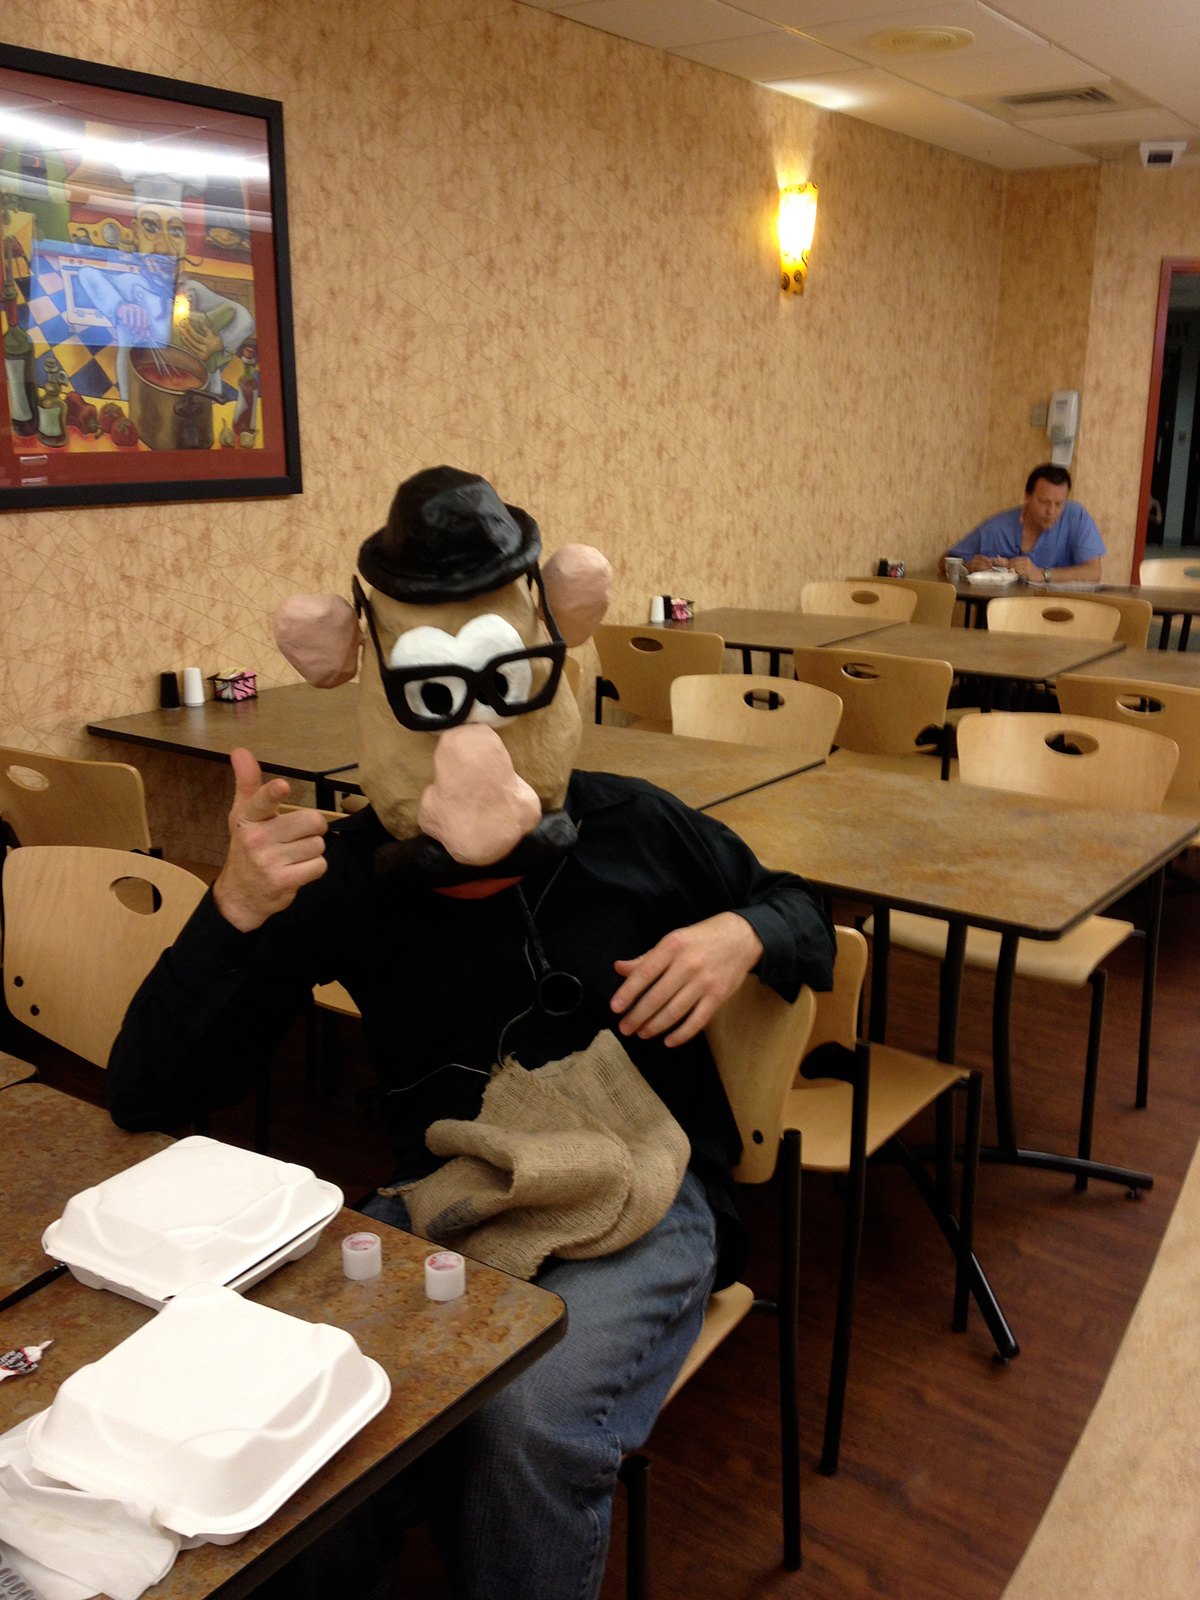 paper art mache scupture mask Halloween costume potato head